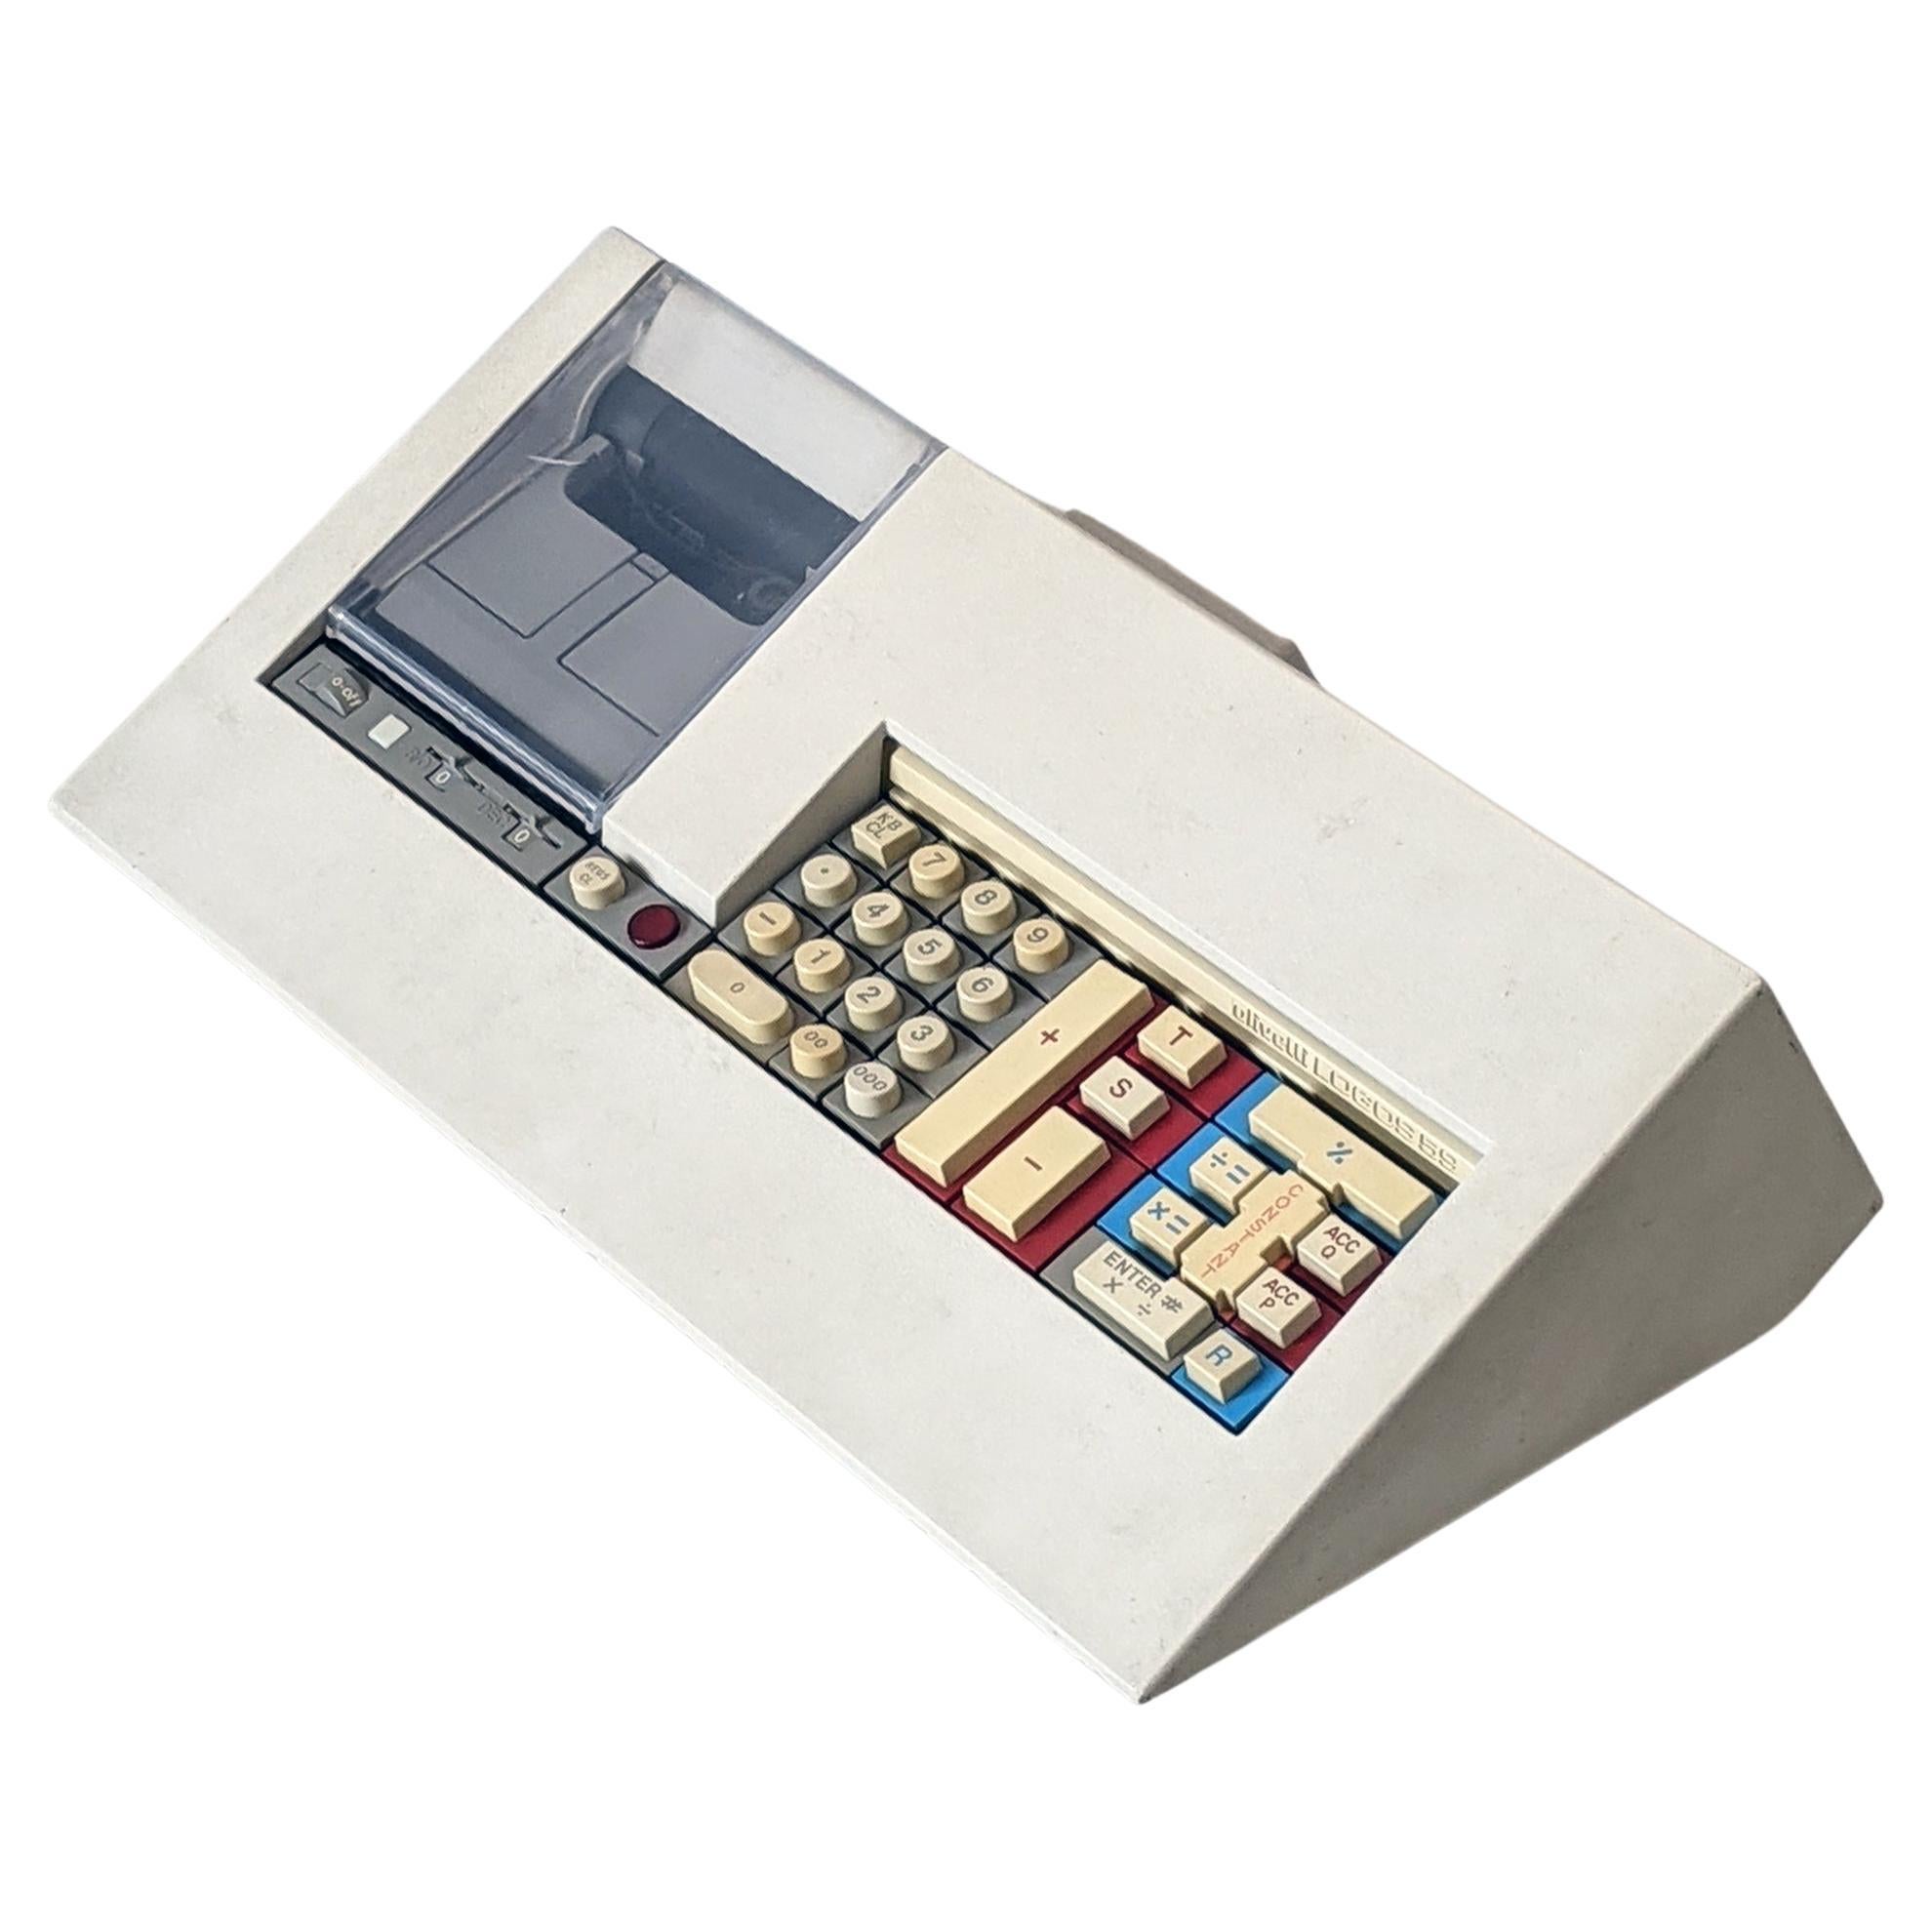 Mario Bellini, LOGOS 50/60 (59) Electronic Printing Calculator for Olivetti 1972